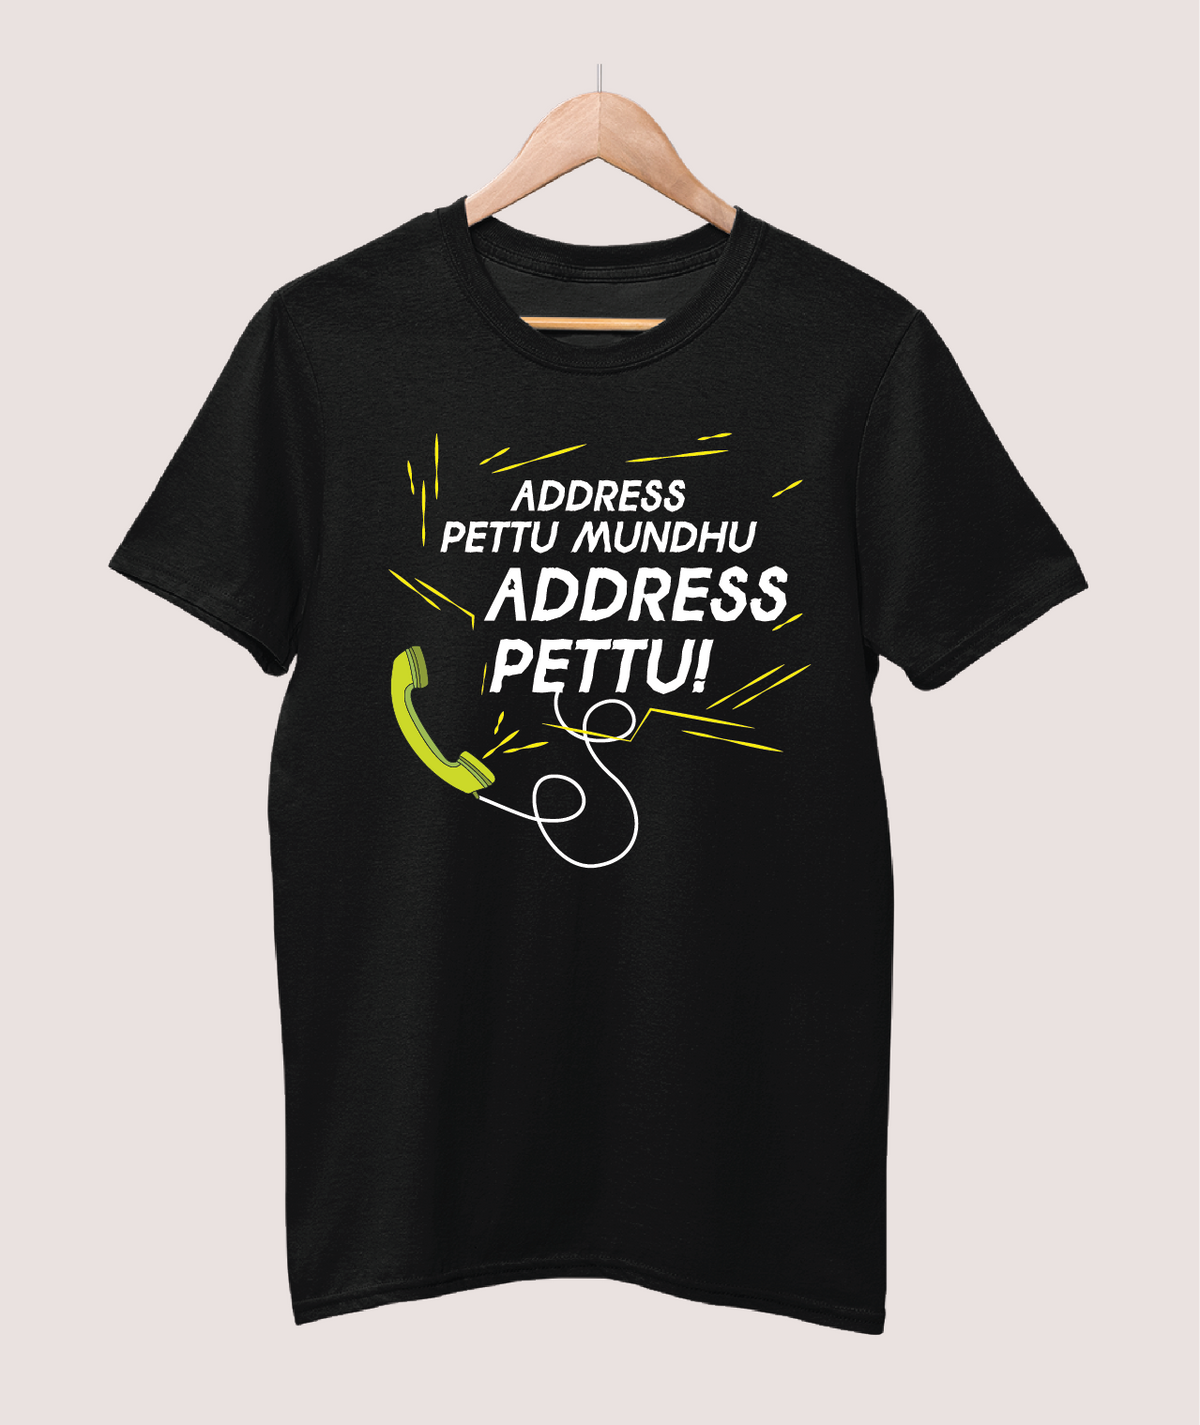 Address Pettu Mundu Address Pettu T-shirt